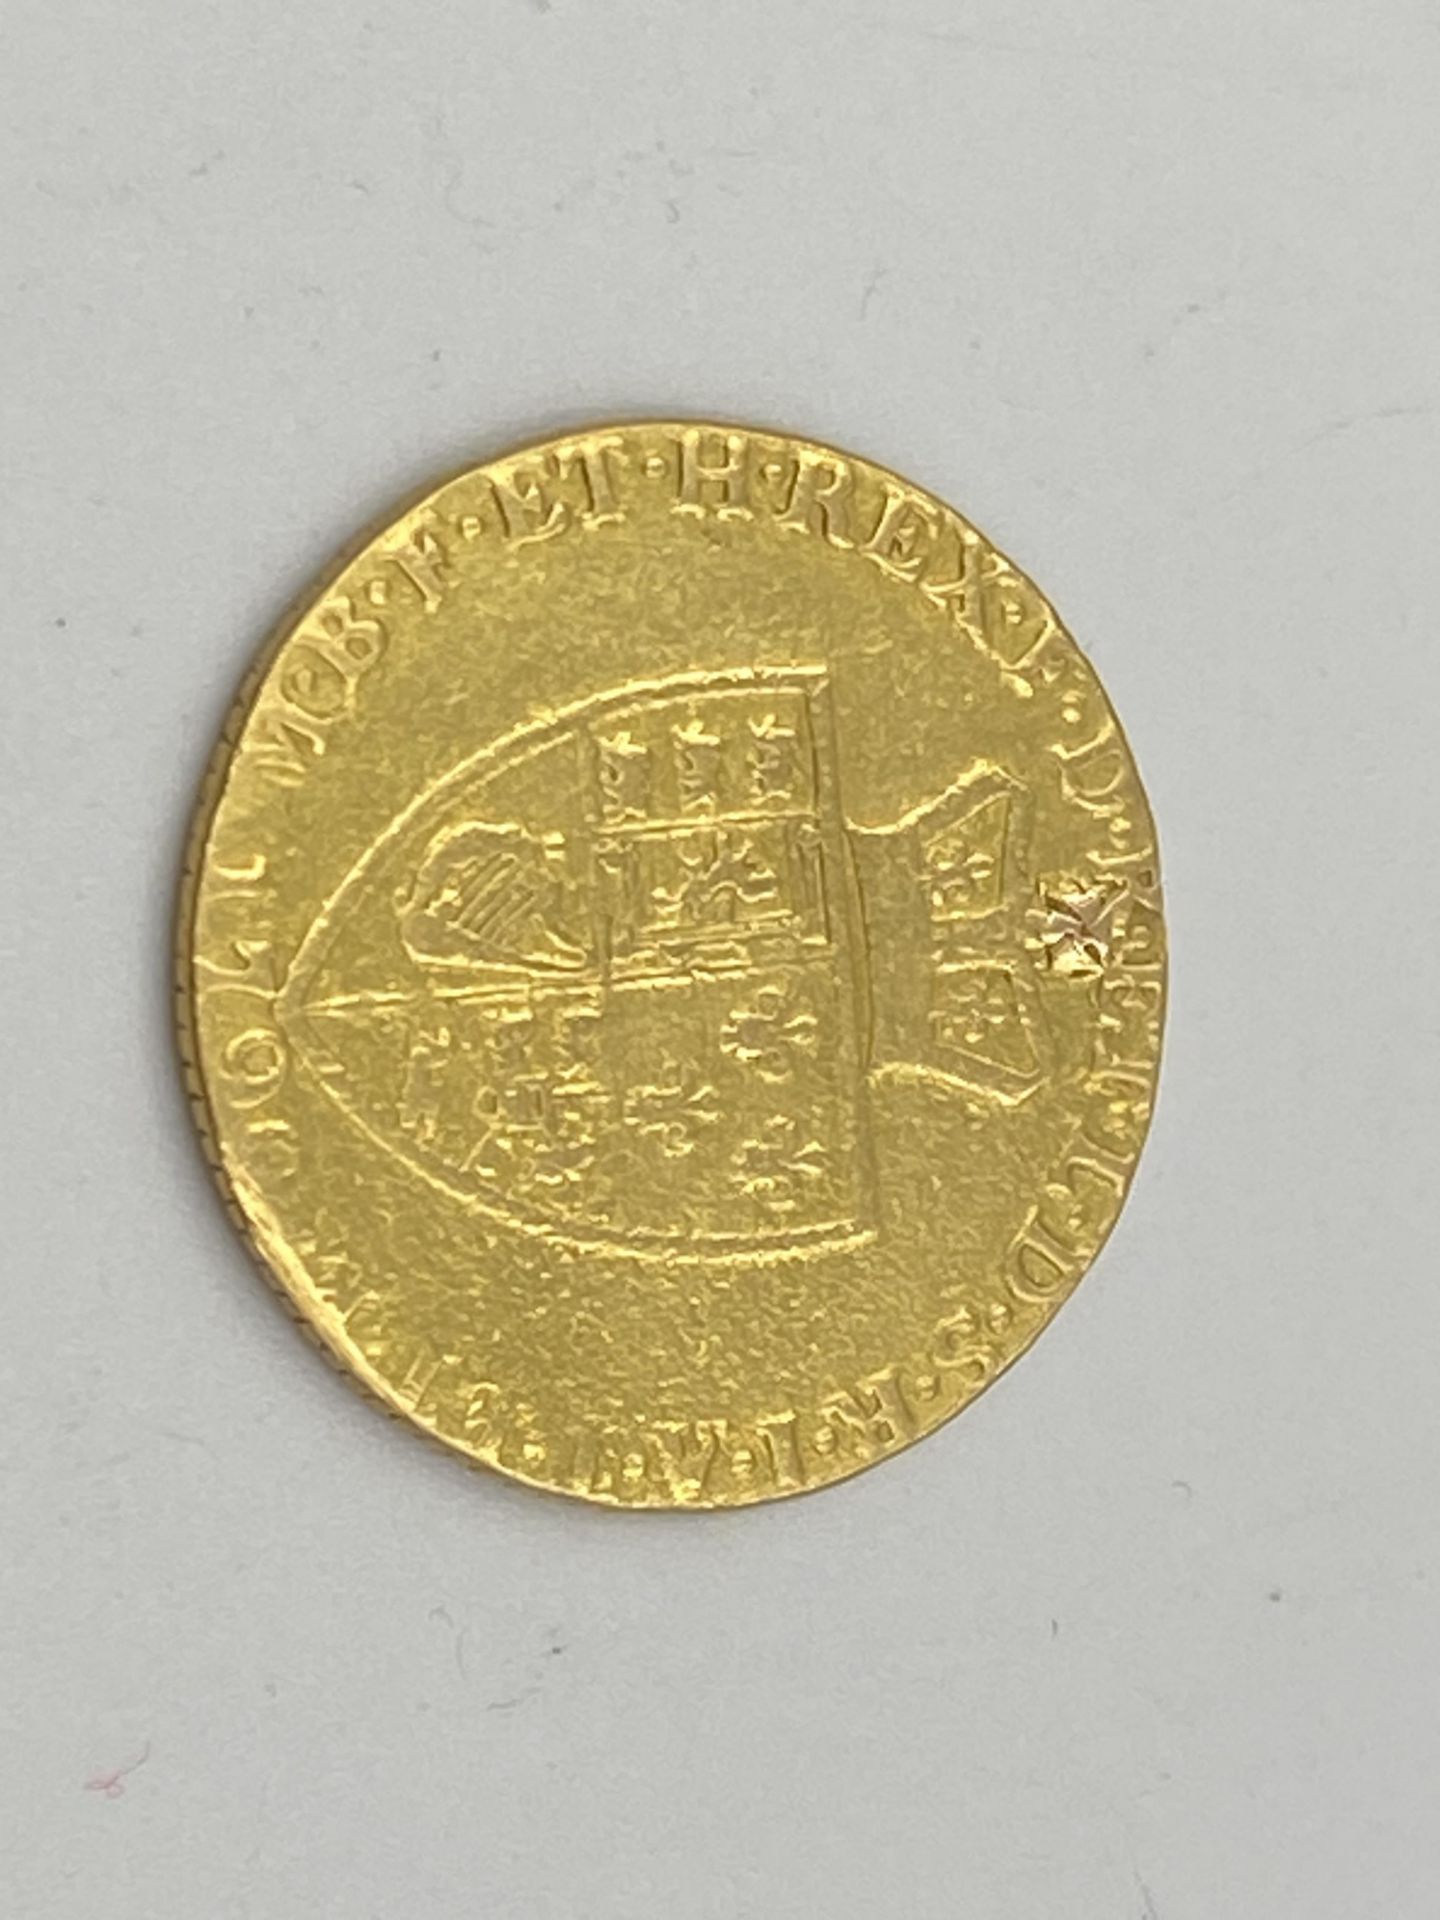 1790 one Guinea coin, 8.16g. Estimate: £500-520 - Image 2 of 2